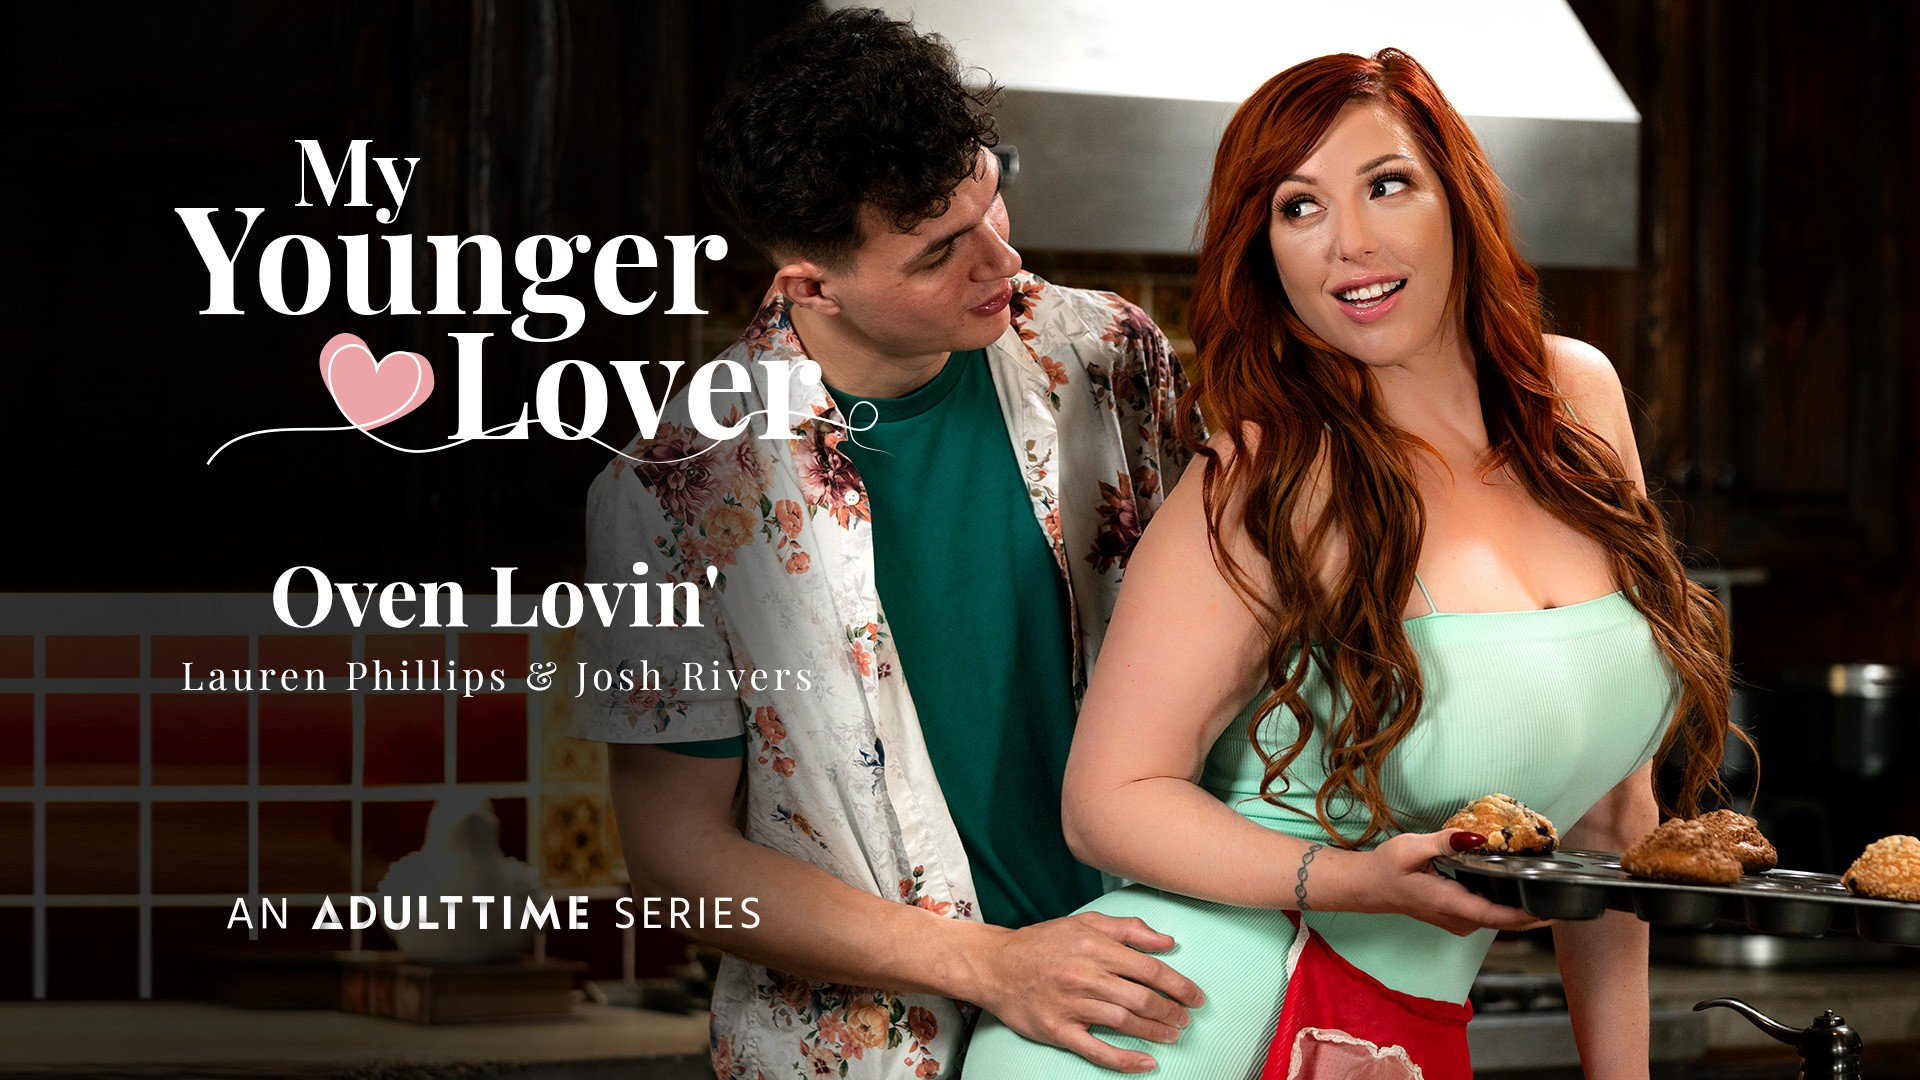 Oven Lovin’ – Lauren Phillips, Josh Rivers – My Younger Lover